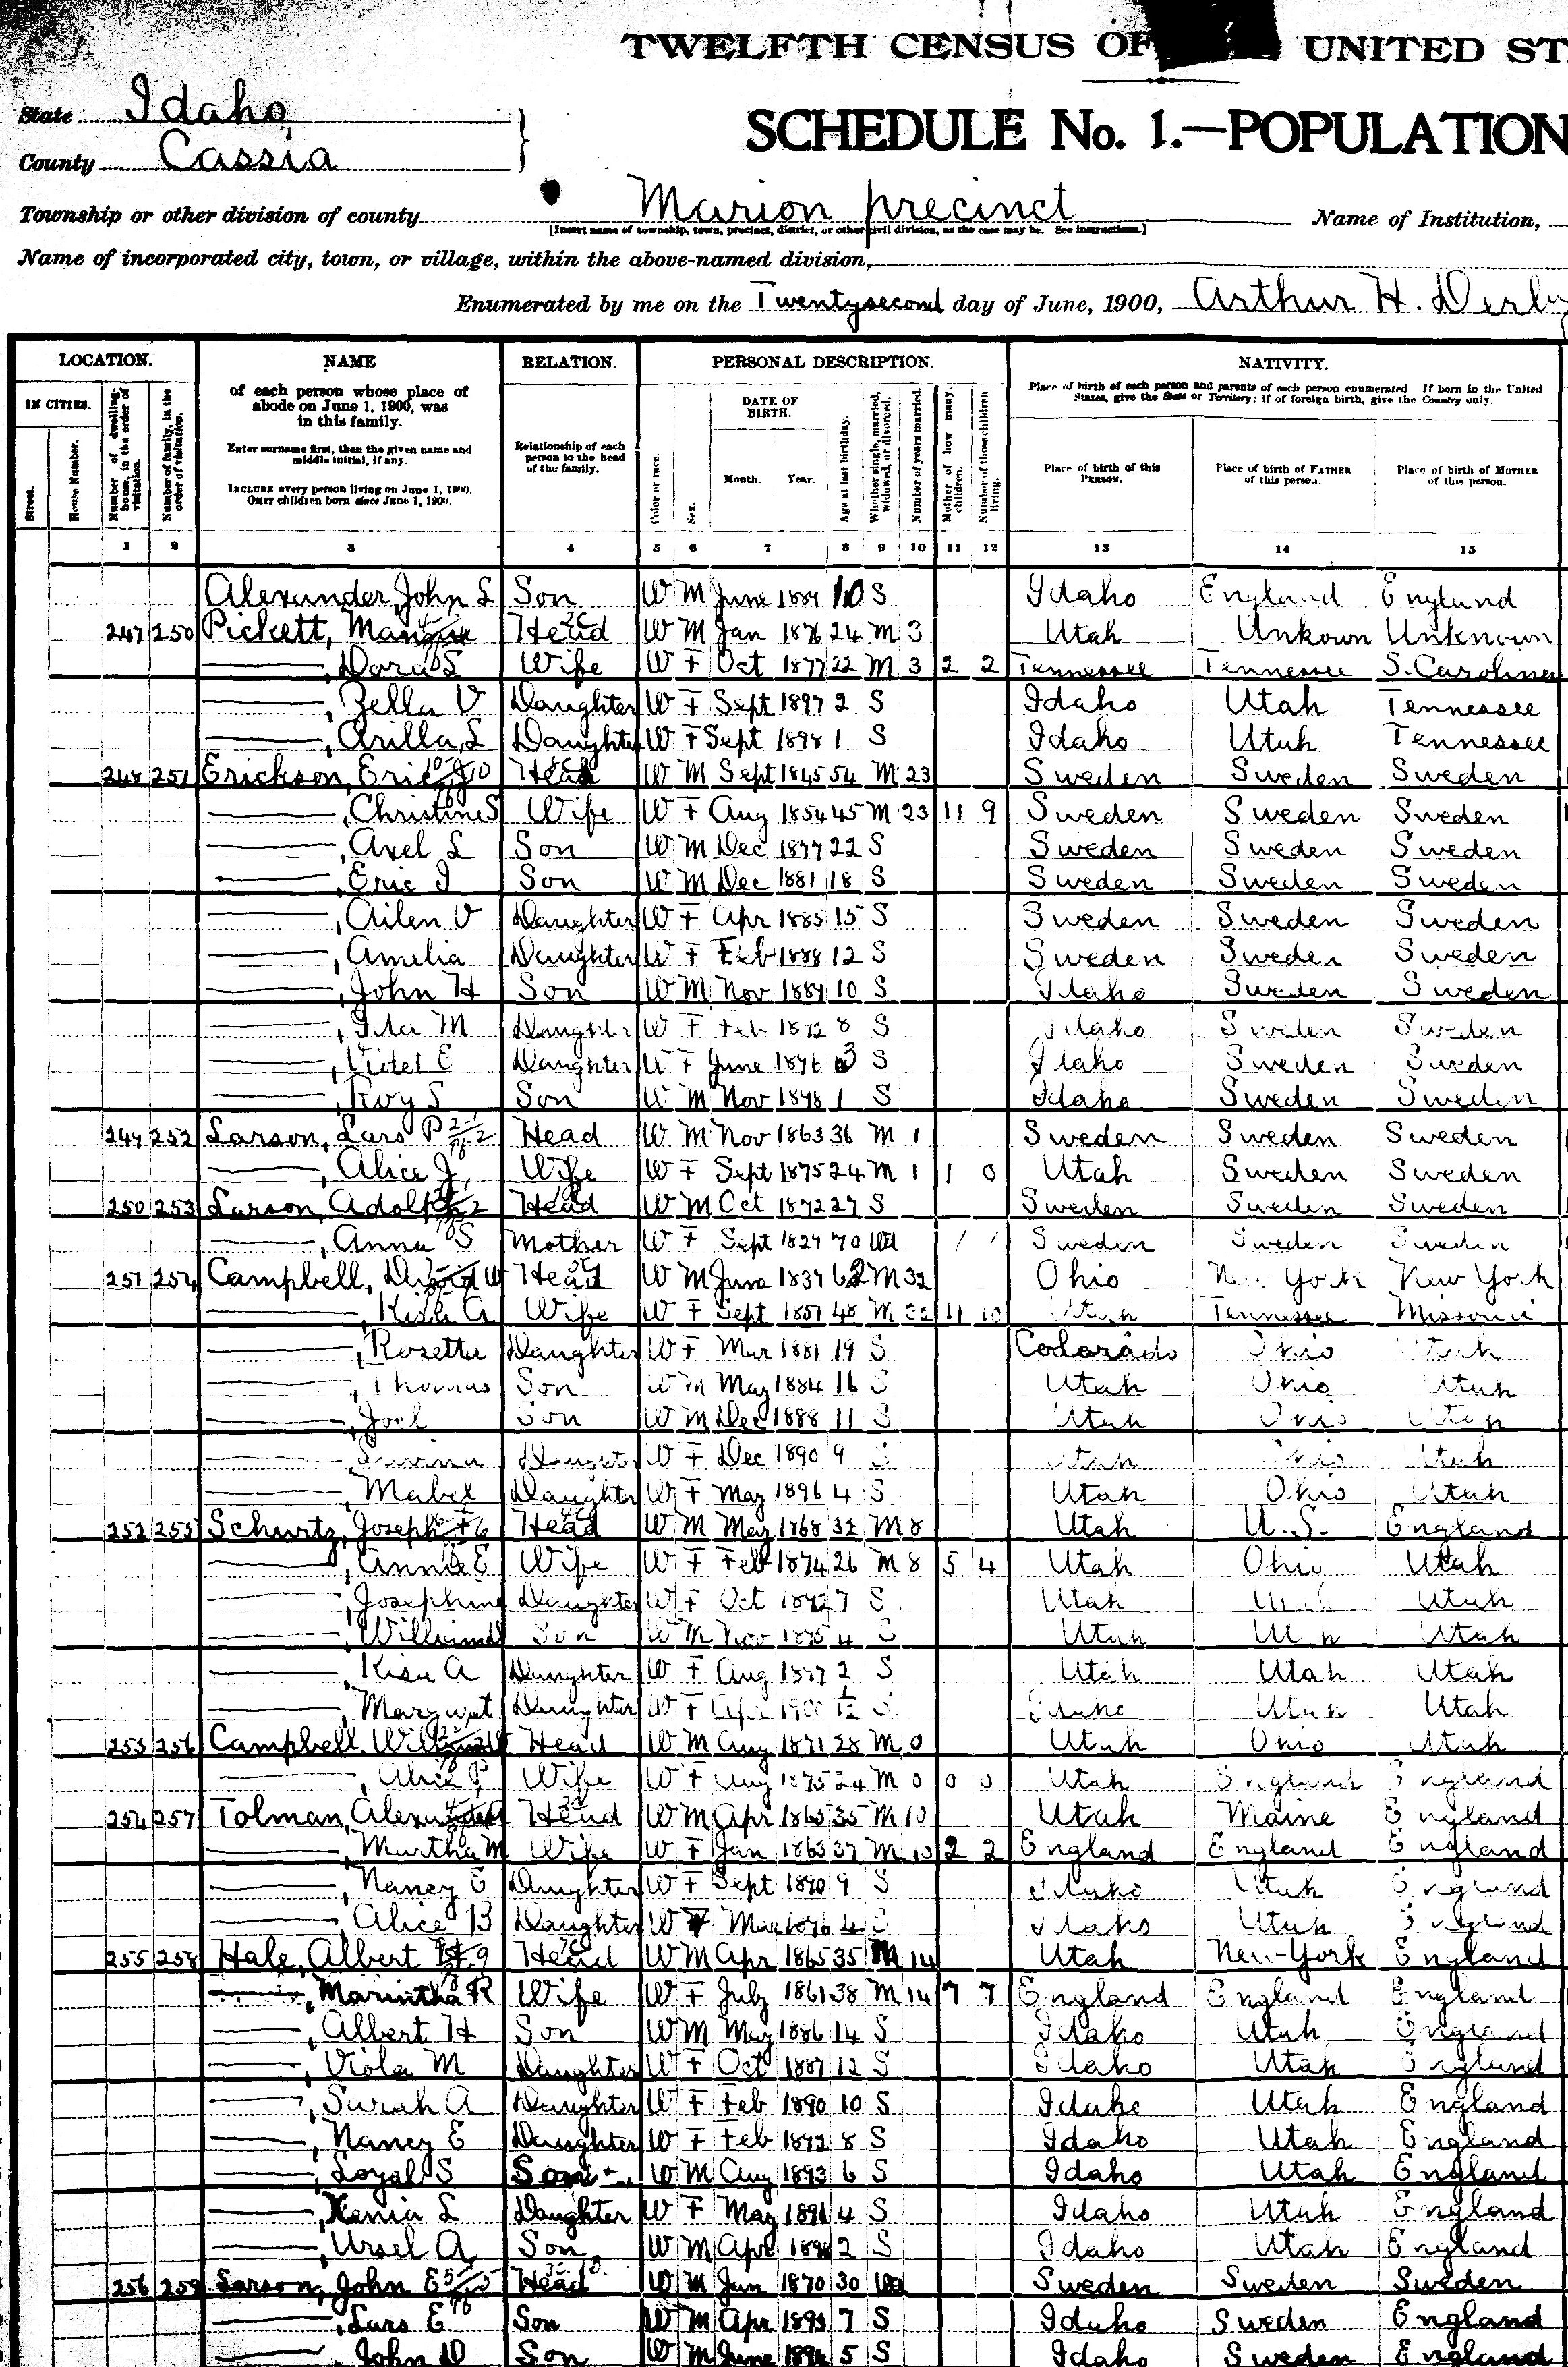 1900 U.S. Census Record-Aaron Alexander Tolman and Martha Mary Barrett